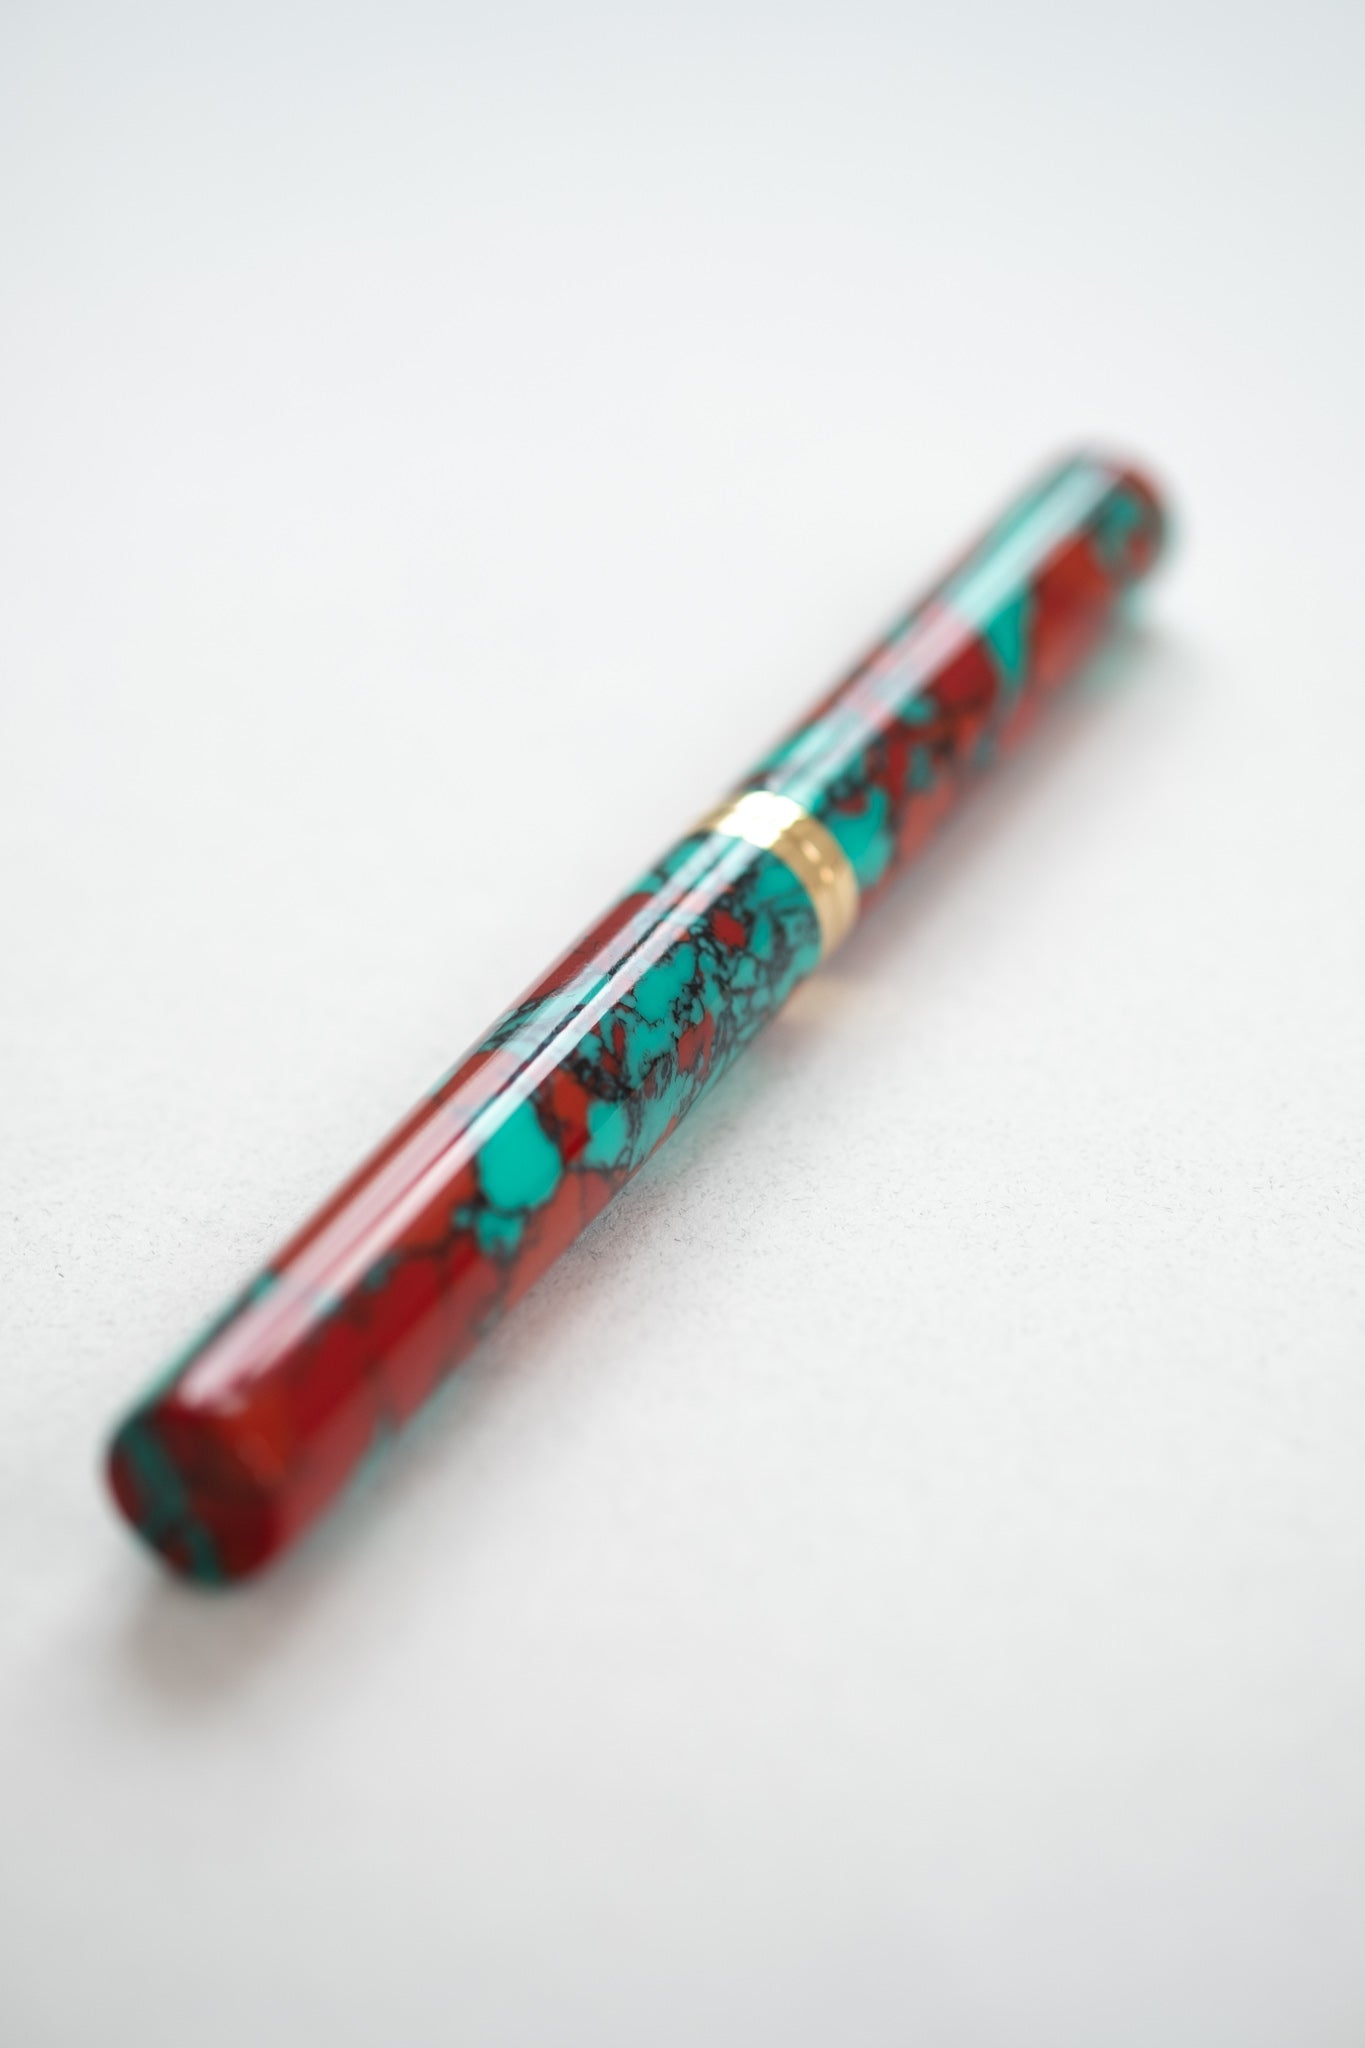 A close up of the red jasper Studio pen on a white desk with a flexible fountain pen nib